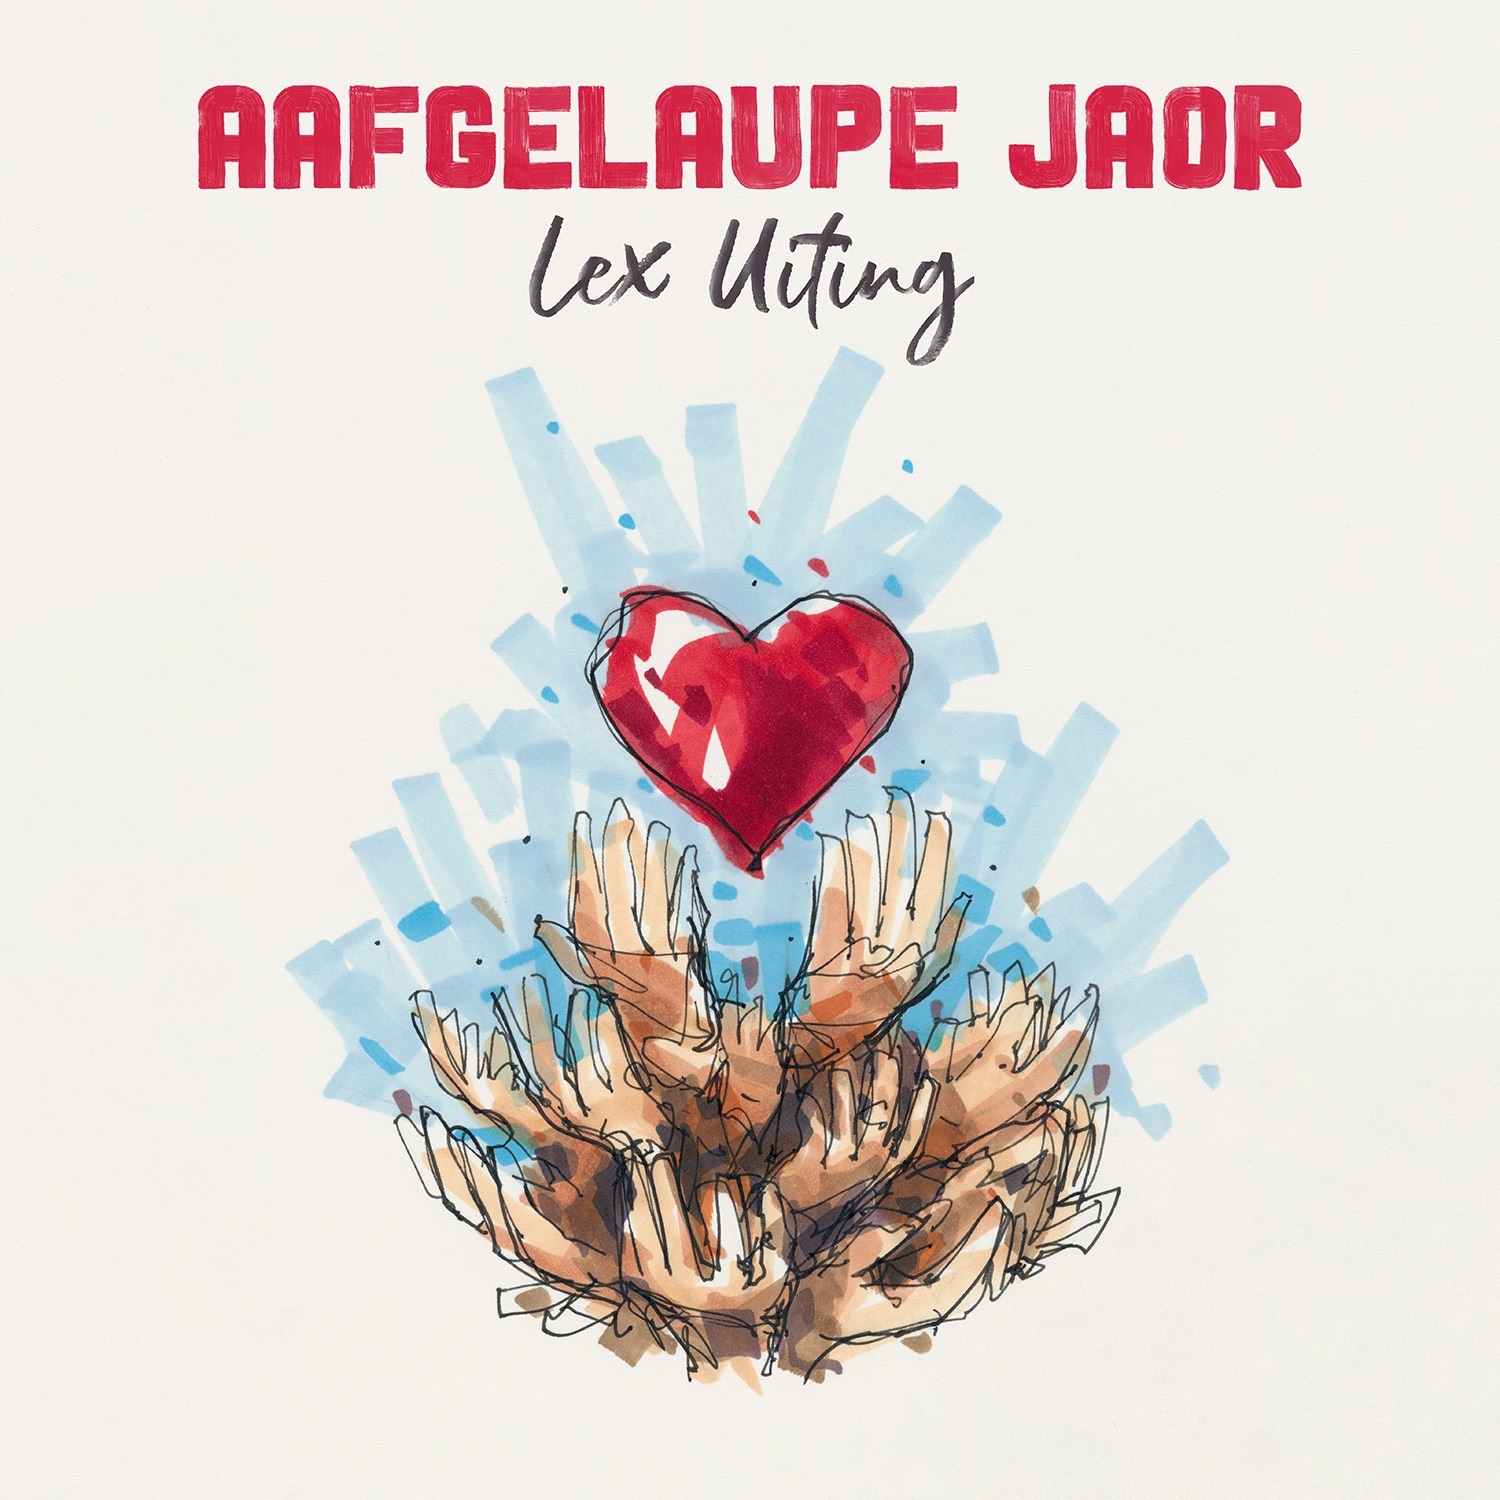 Lex Uiting - Aafgelaupe Jaor (Single)